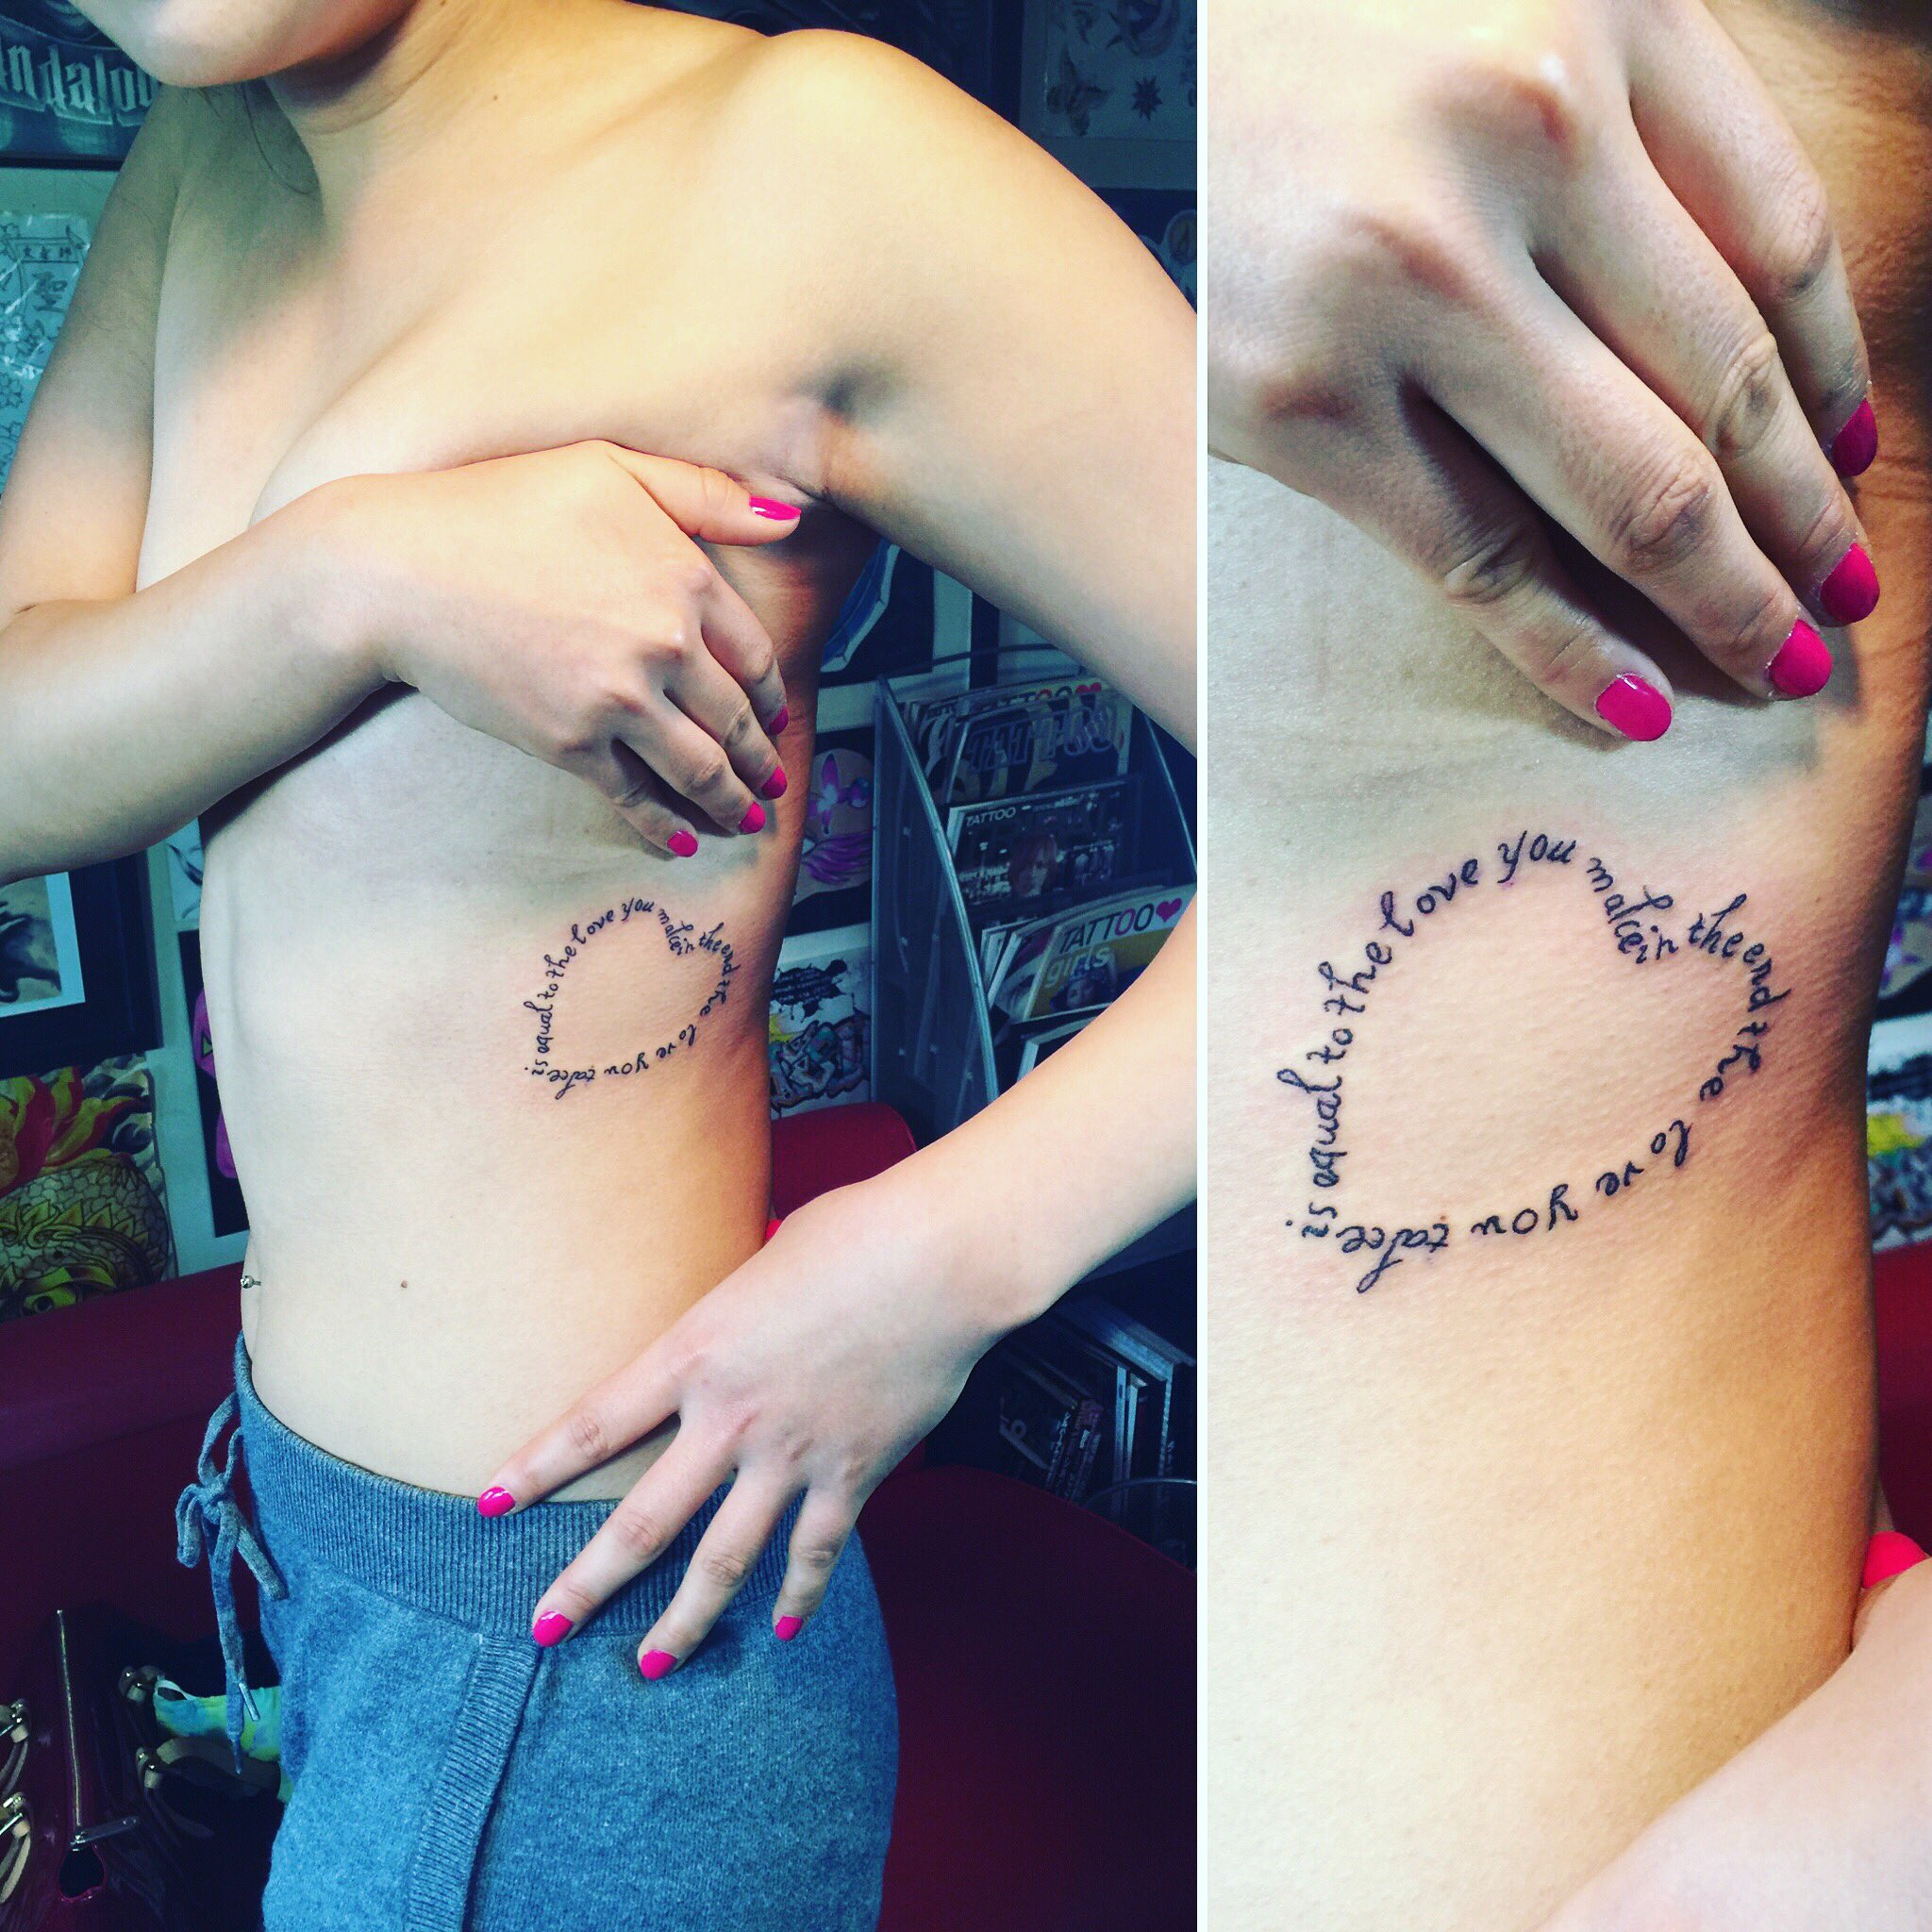 2face Tattoo Studio 女の子の脇腹に 型のメッセージ彫りました Tattoo タトゥー好きな人rt タトゥー 刺青 Heart ハート メッセージ ワンポイント 千葉 木更津 聖針